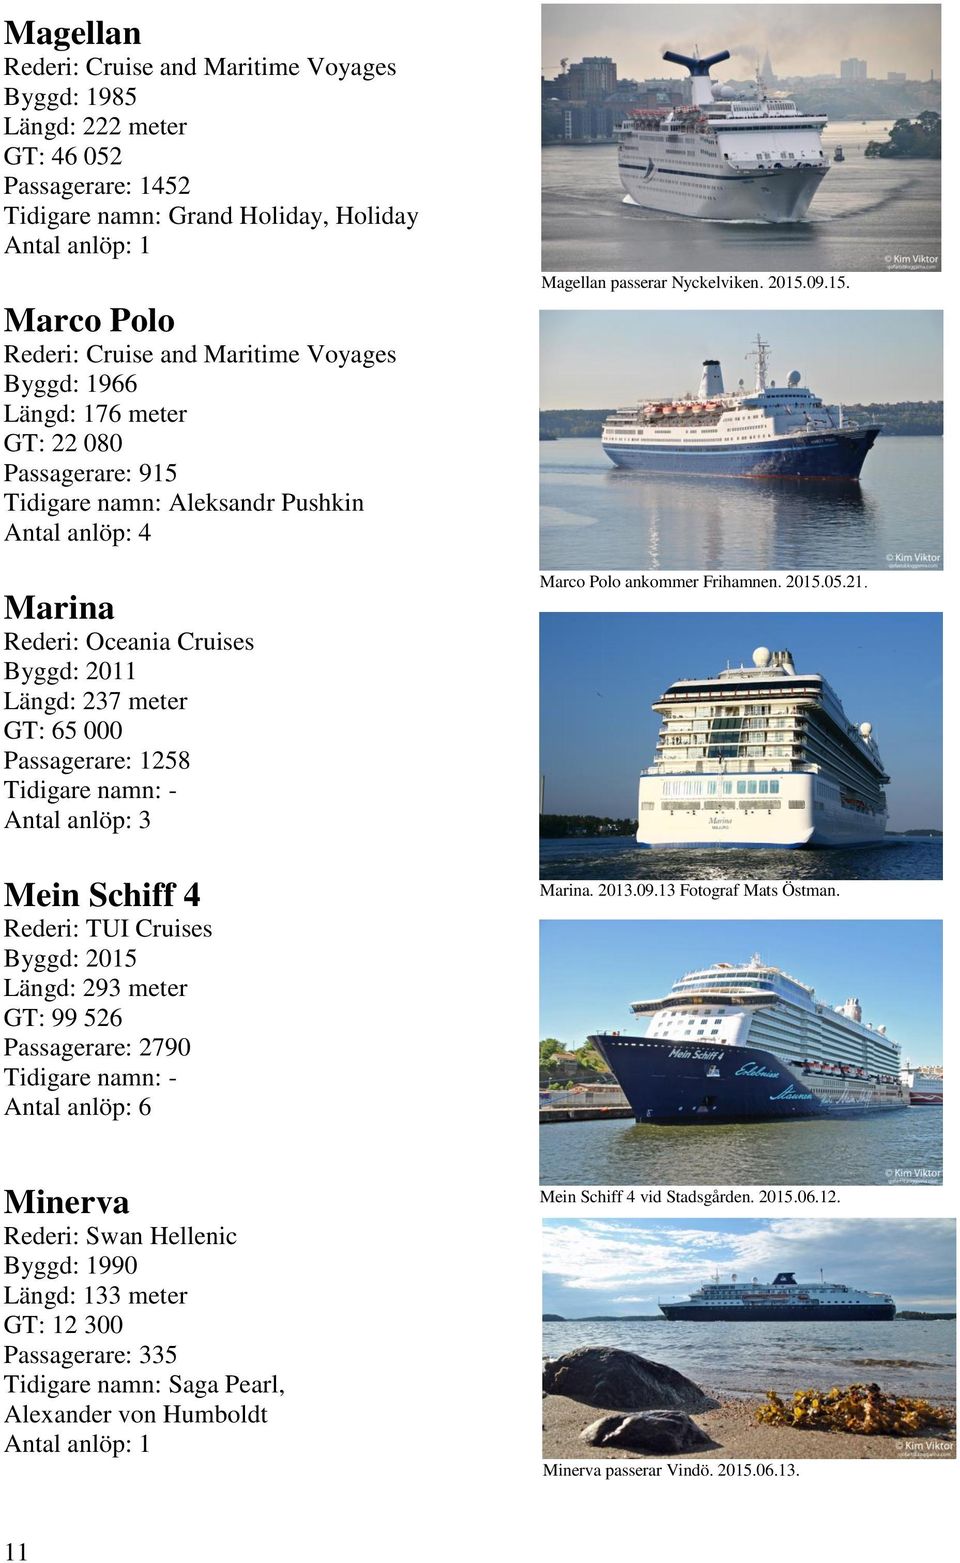 Mein Schiff 4 Rederi: TUI Cruises Byggd: 2015 Längd: 293 meter GT: 99 526 Passagerare: 2790 Antal anlöp: 6 Magellan passerar Nyckelviken. 2015.09.15. Marco Polo ankommer Frihamnen. 2015.05.21.